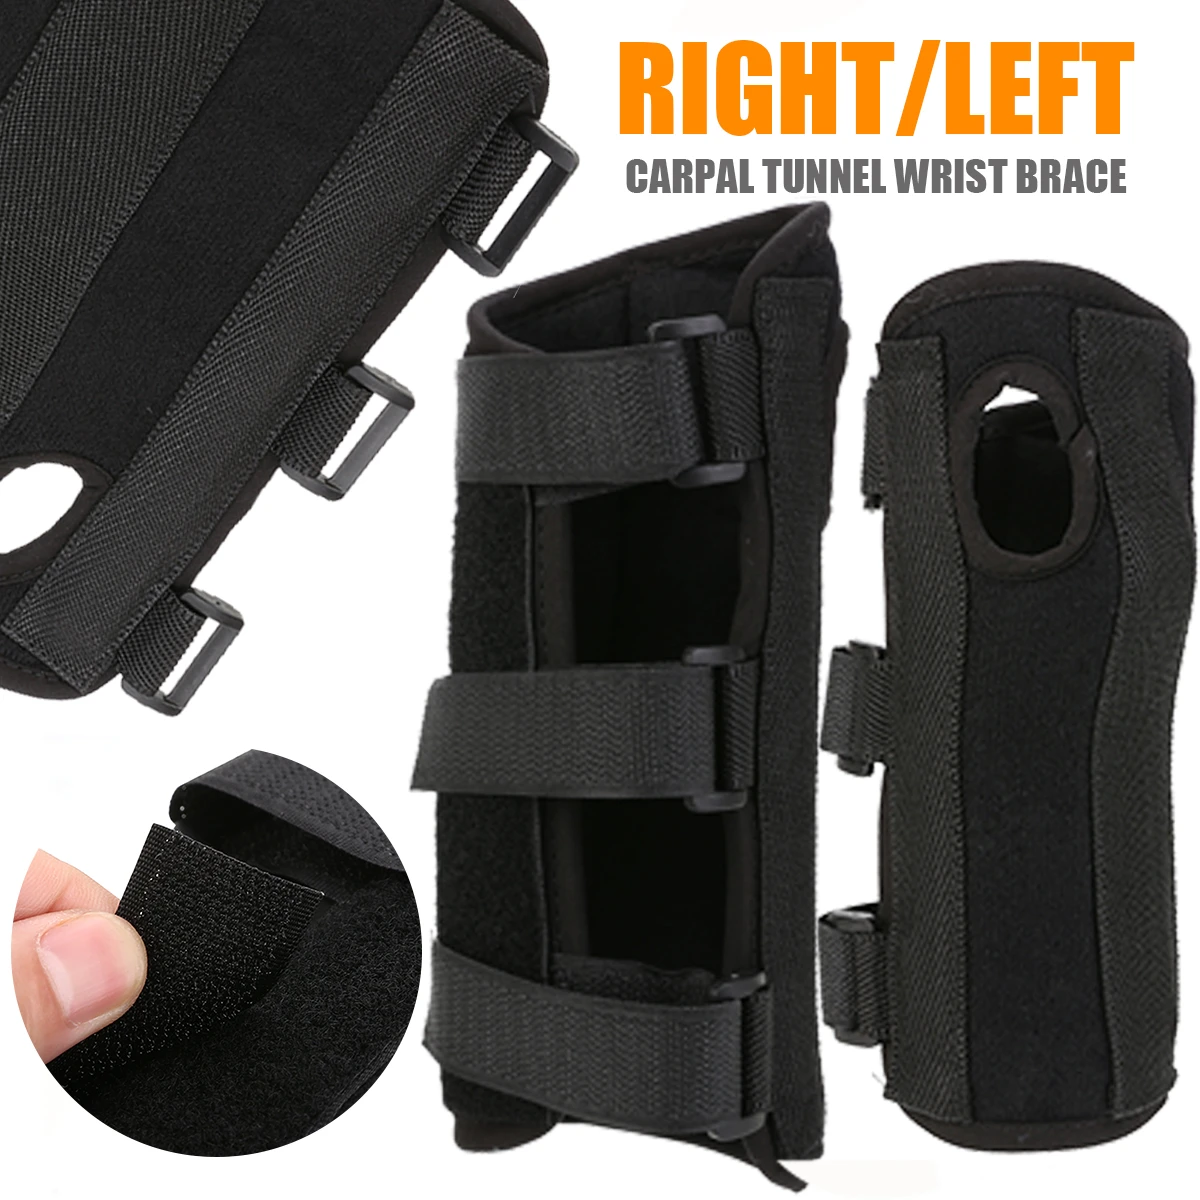 1Pc Adjustable Wrist Support Brace Splint Arthritis Band Carpal Tunnel Wrist Brace Sprain Prevention Wrist Sports Protector